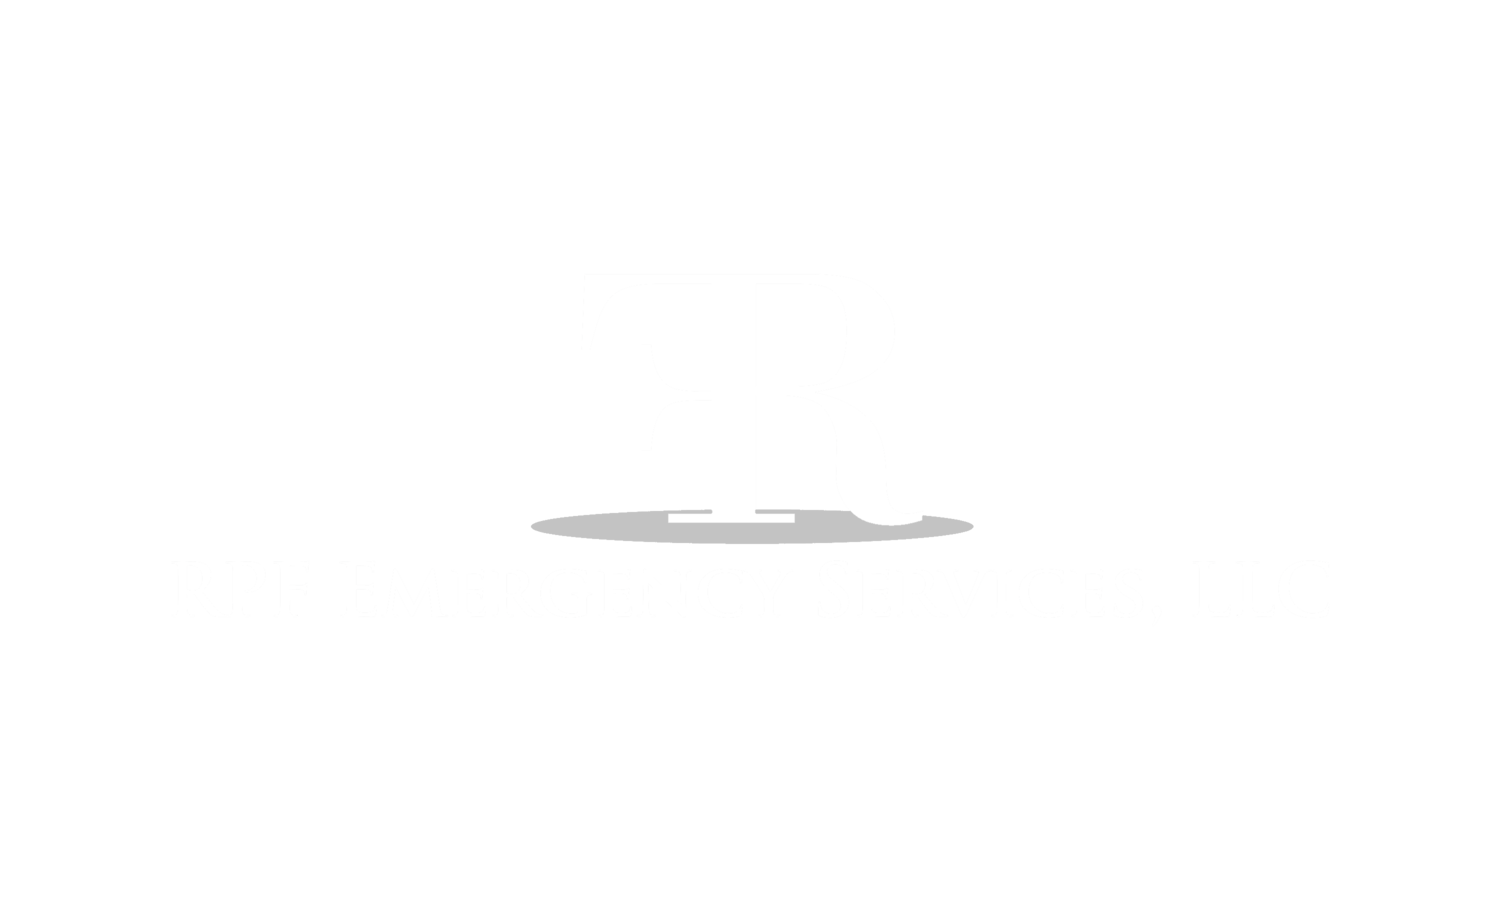 RPF Emergency Services, LLC